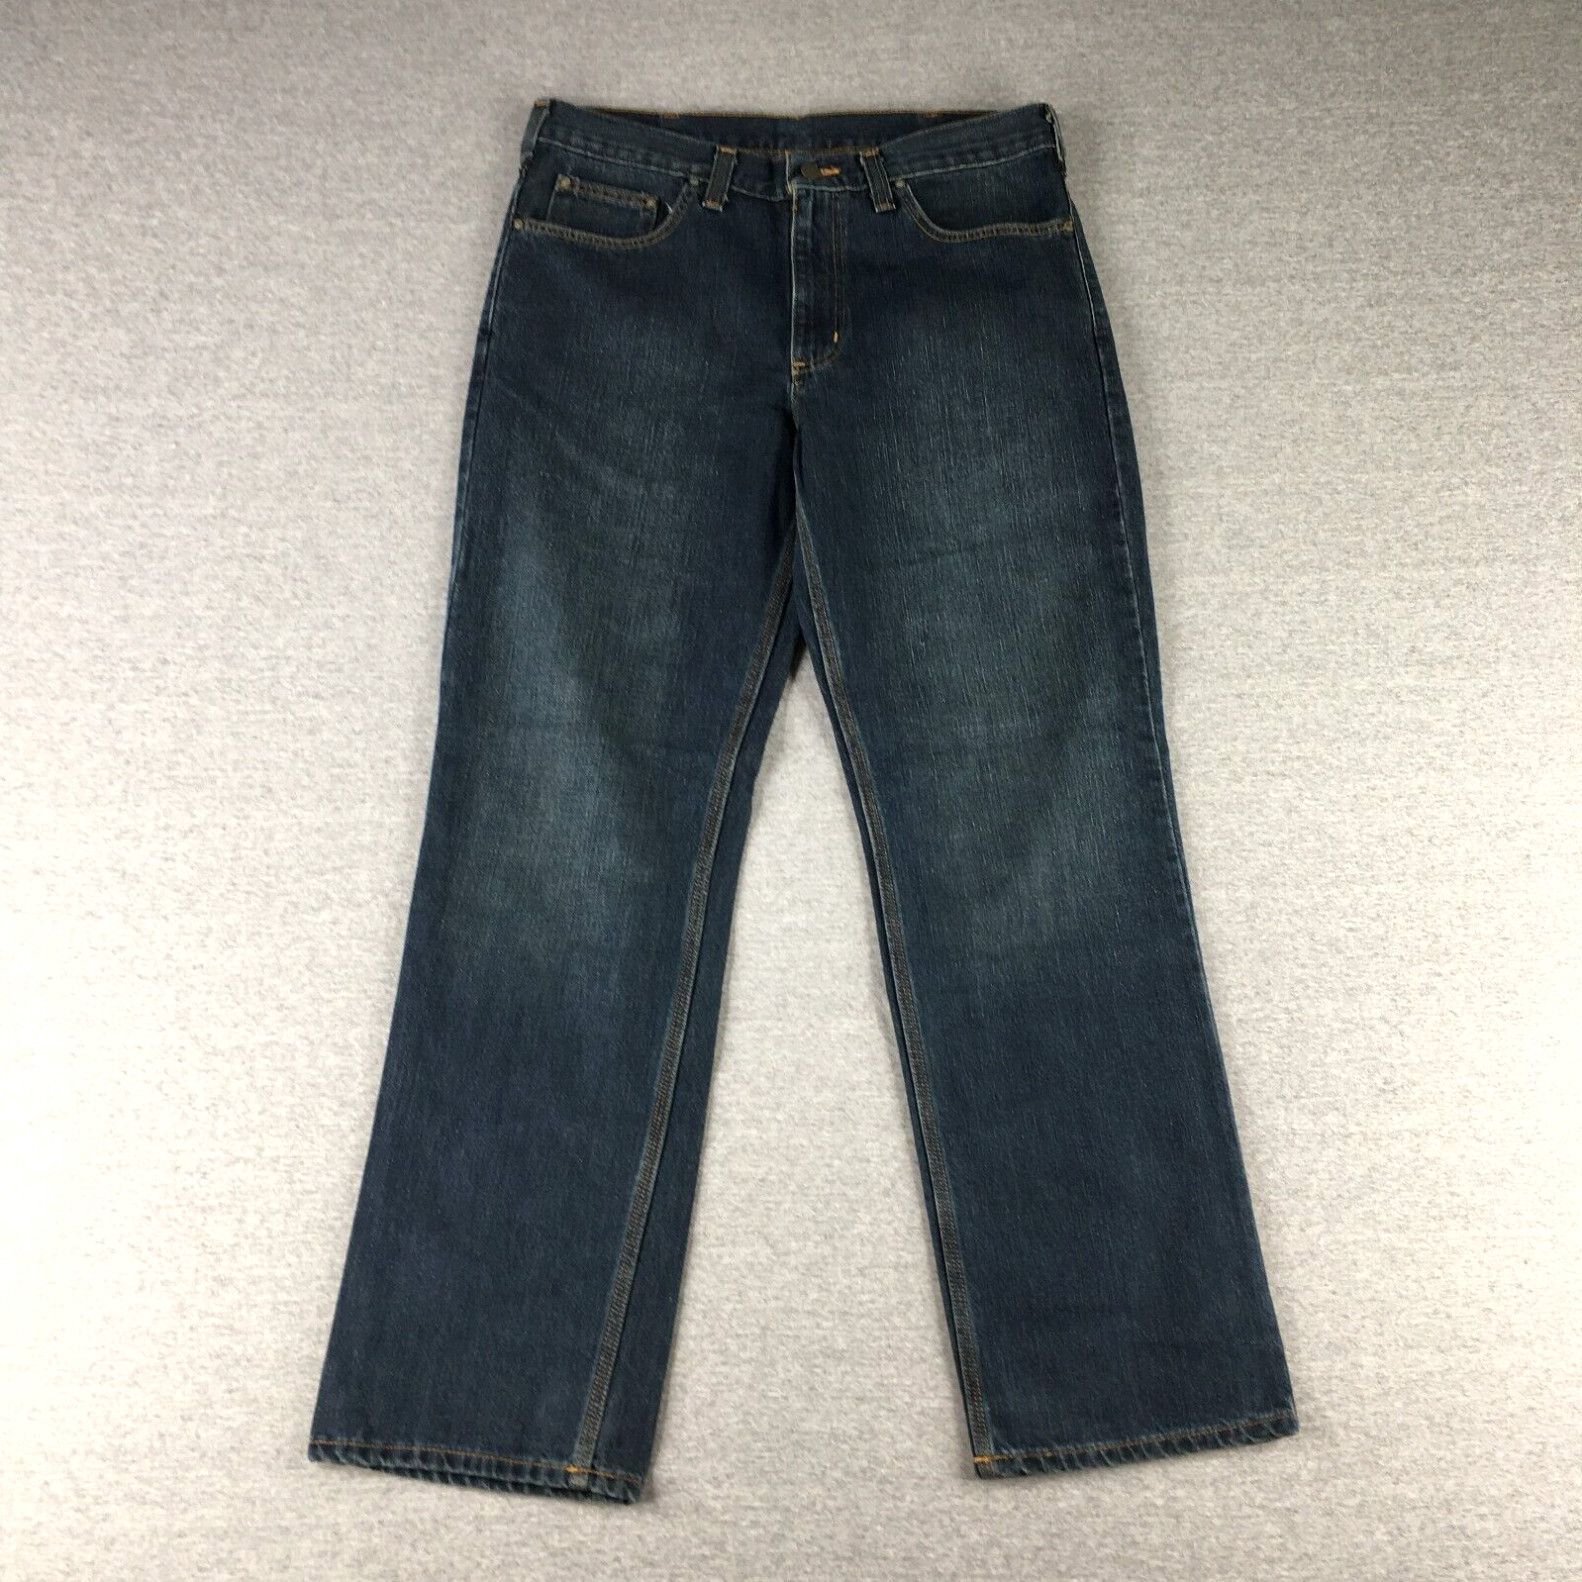 Carhartt Carhartt Jeans Mens 33x32 Holter Jean Relaxed Fit Denim Pants ...